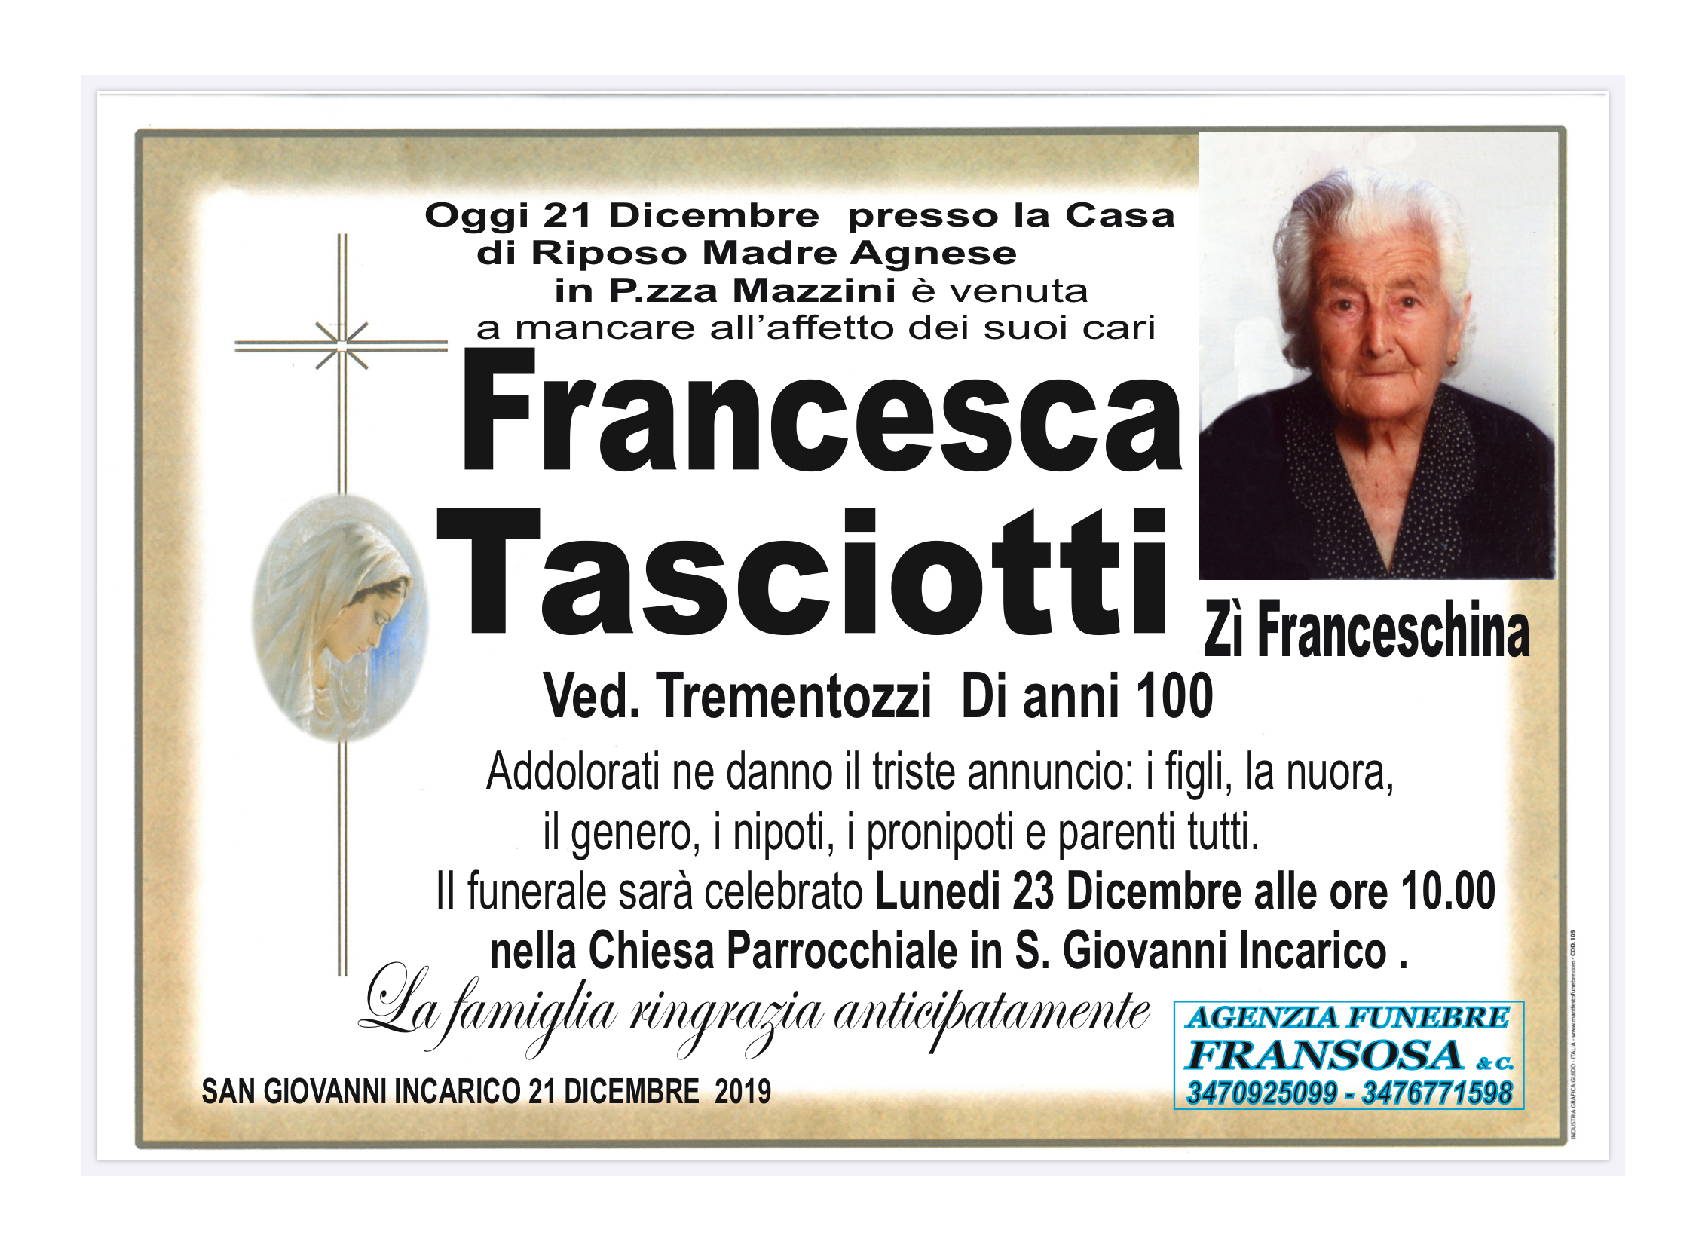 Francesca Tasciotti